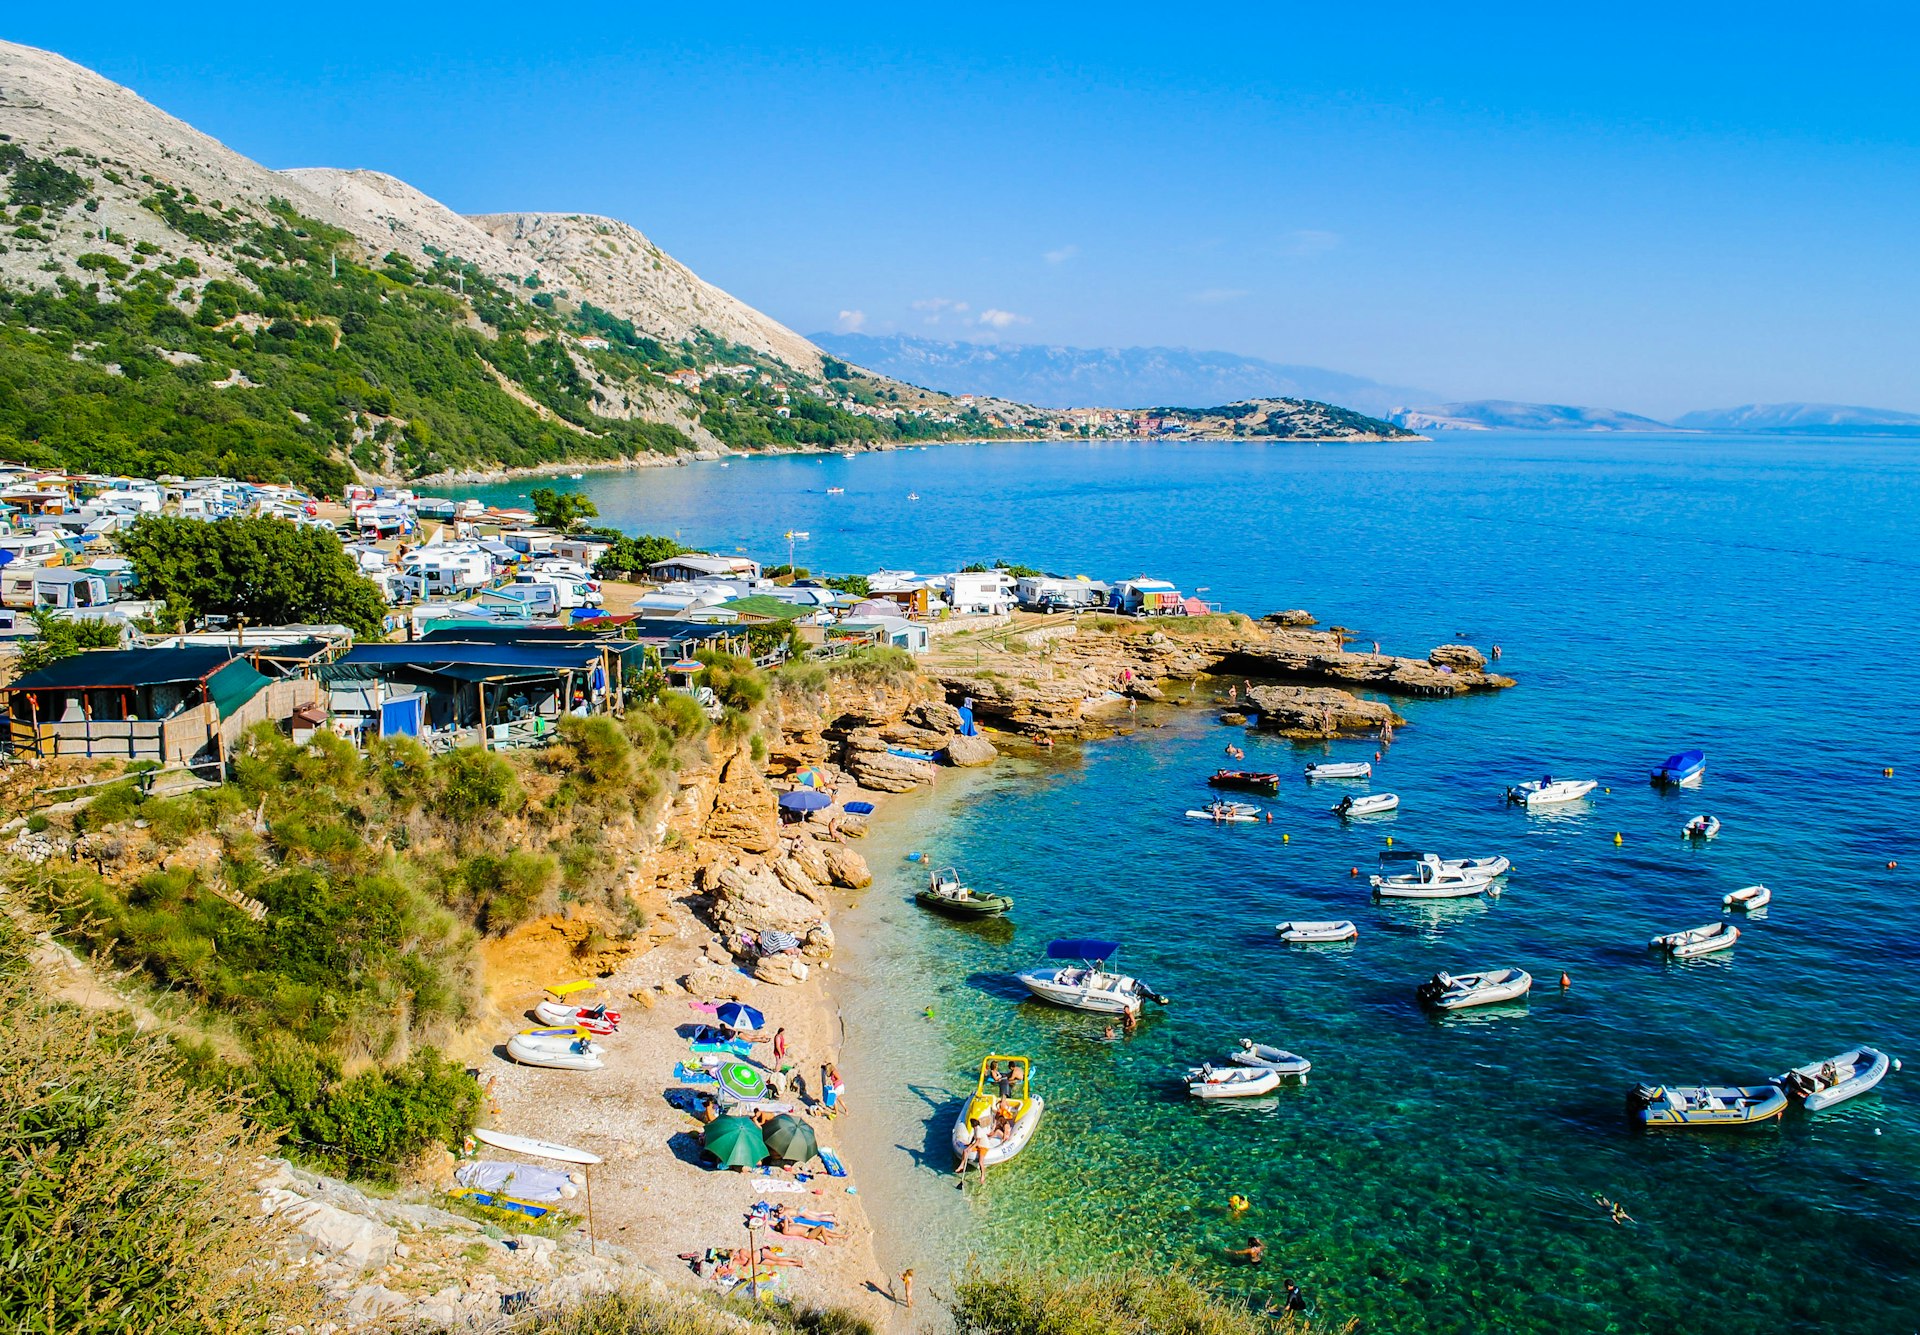 A views of sunbathers and boats at Stara Baska beach on Krk island, Croatia